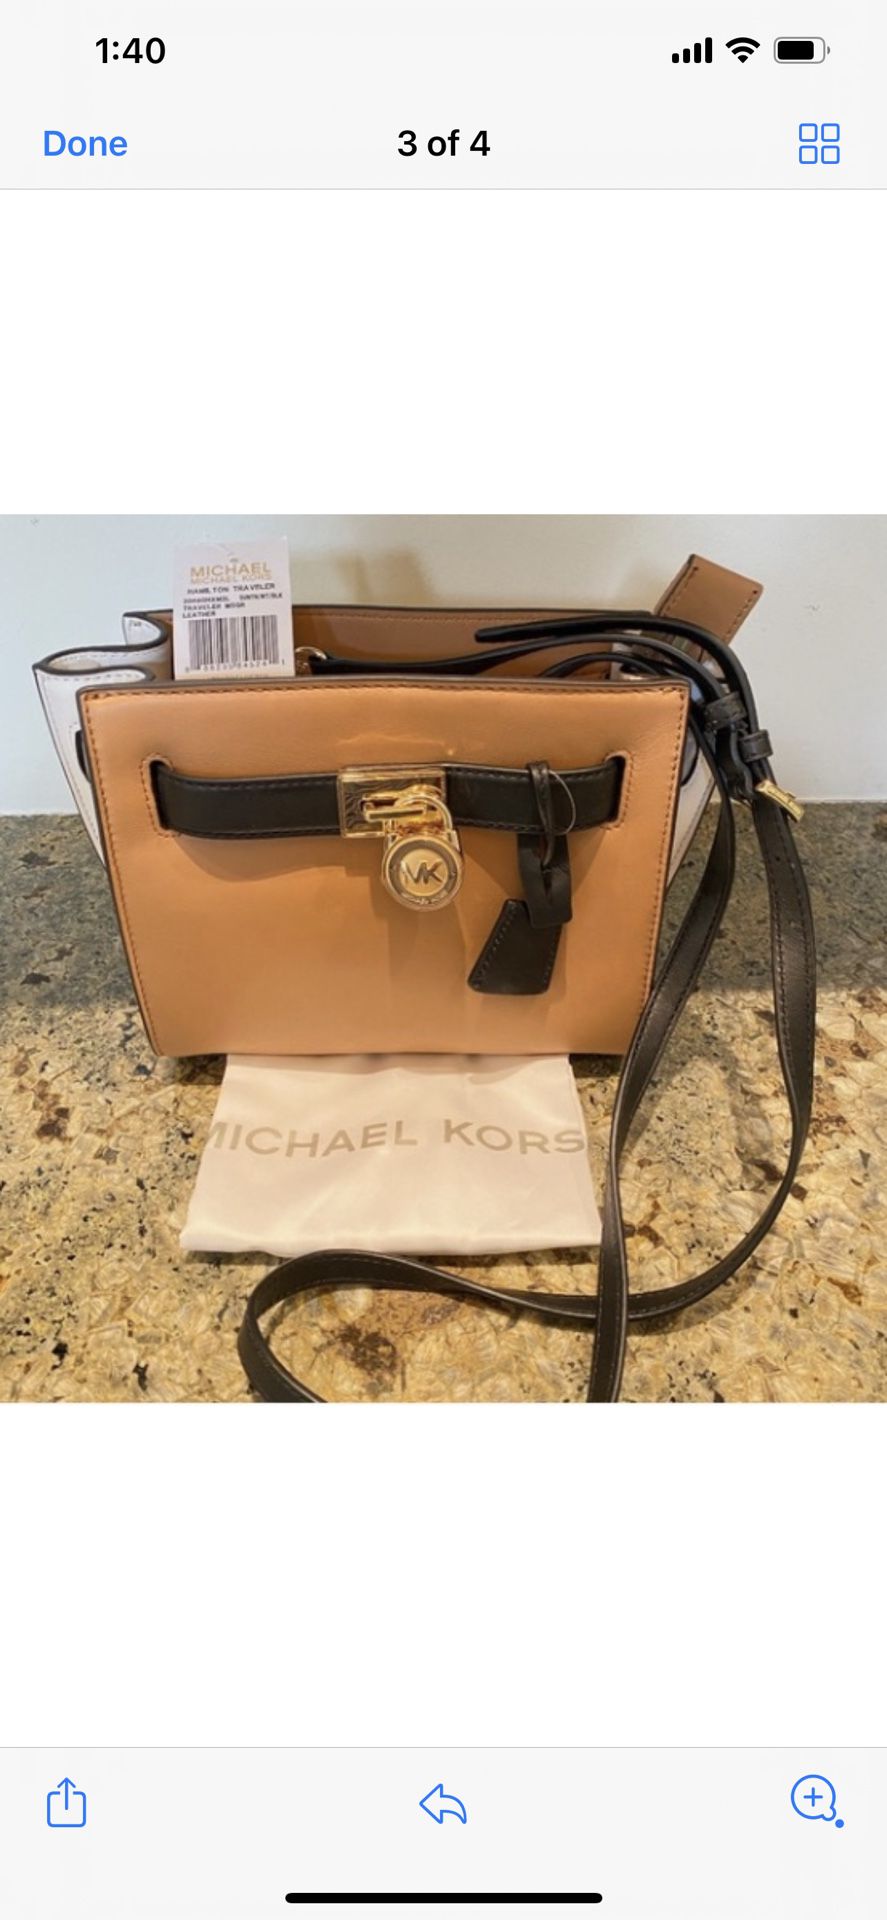 Michael Kors Hamilton Traveler Handbag